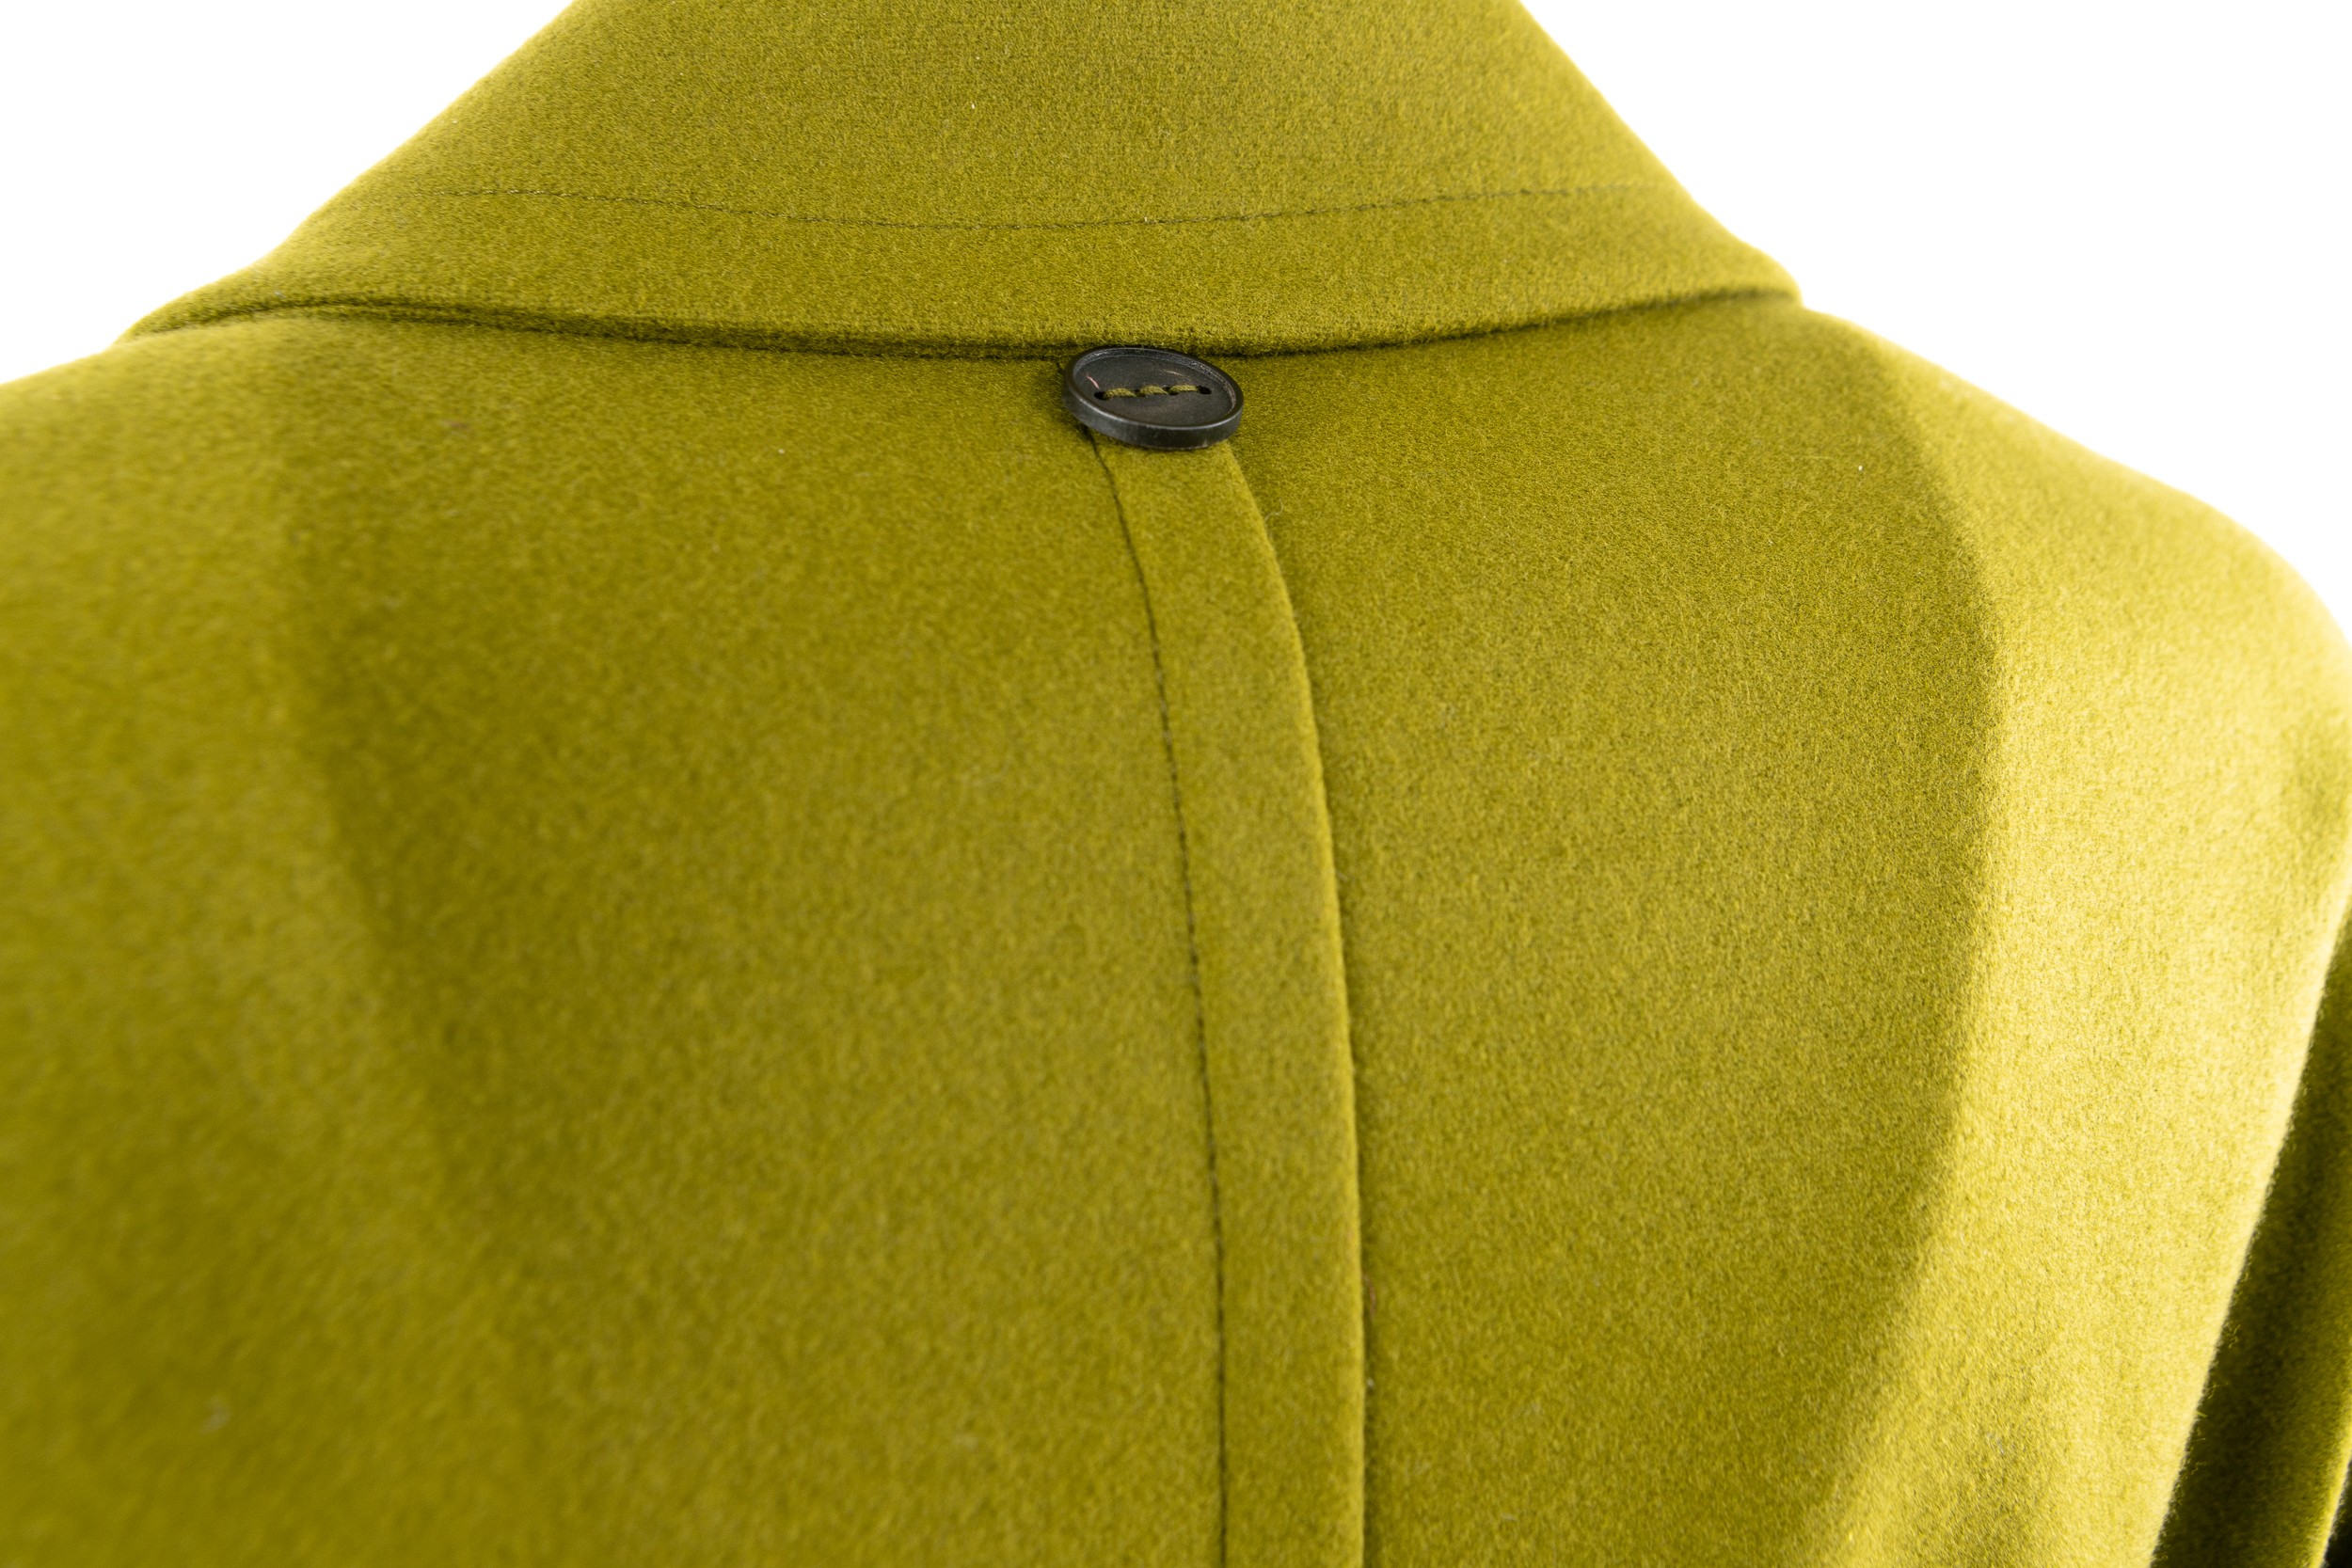 Hevo Coat OSTUNI R719 2203 Green - New Collection Autumn Winter 2019 - 2020